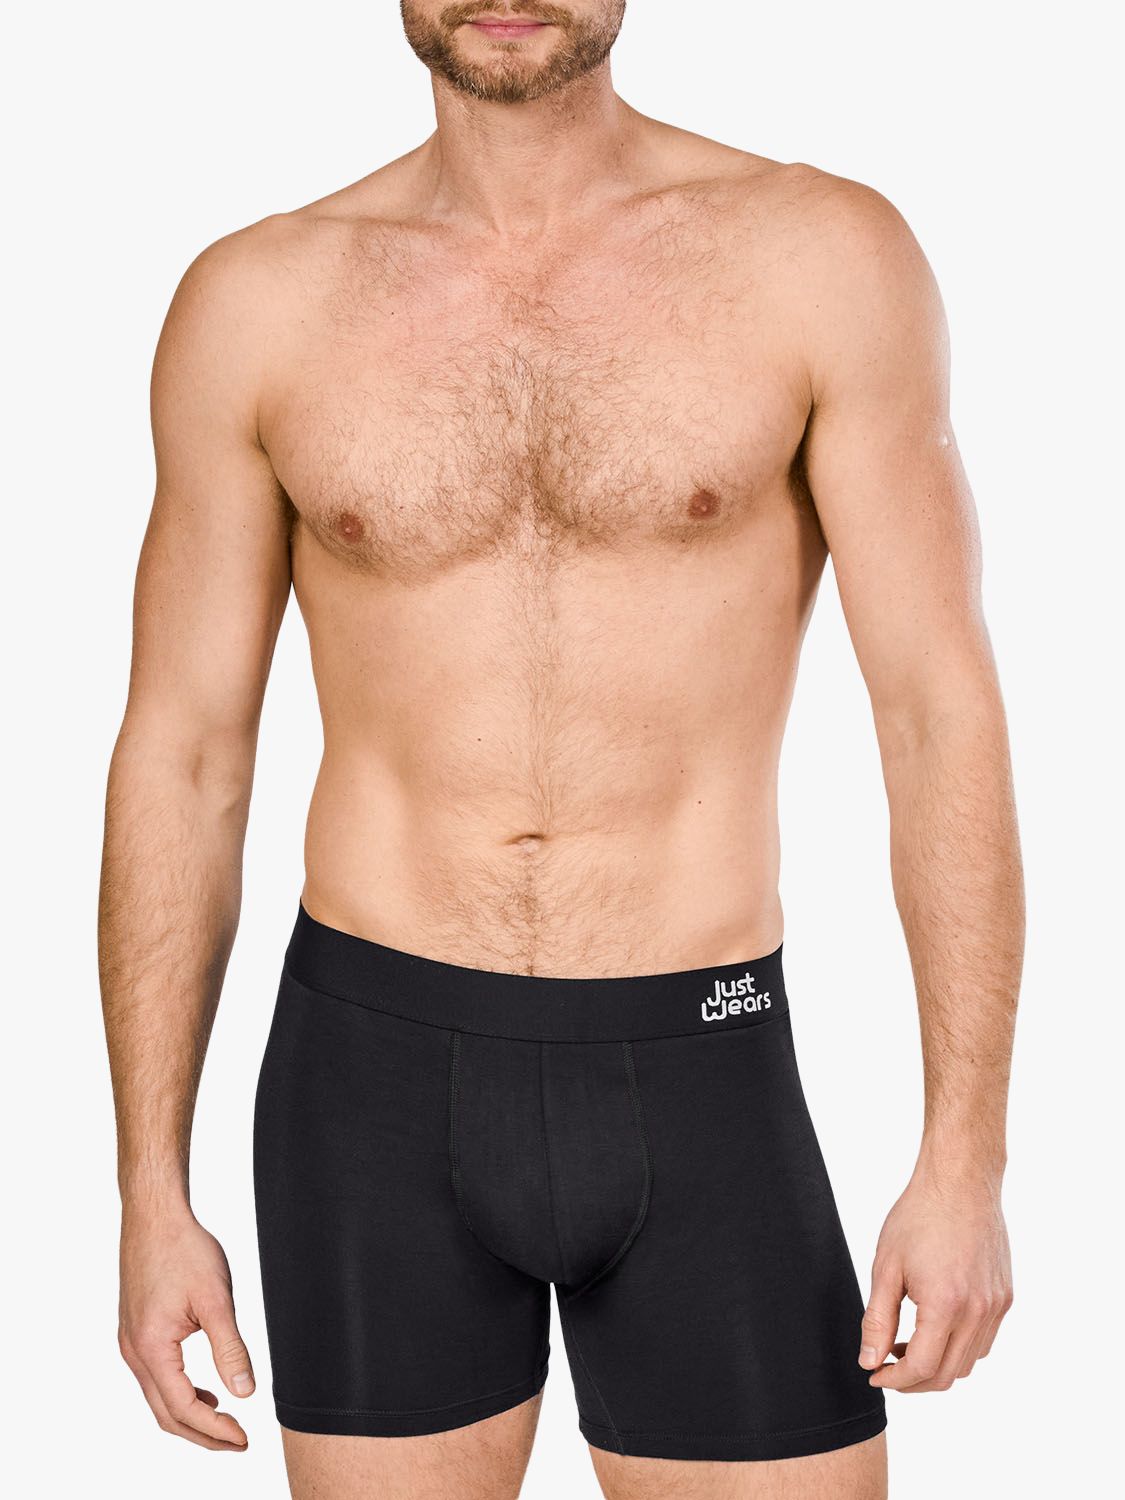 Adidas Men's Underwear Multi-Packs in Men's Multi-Packs 